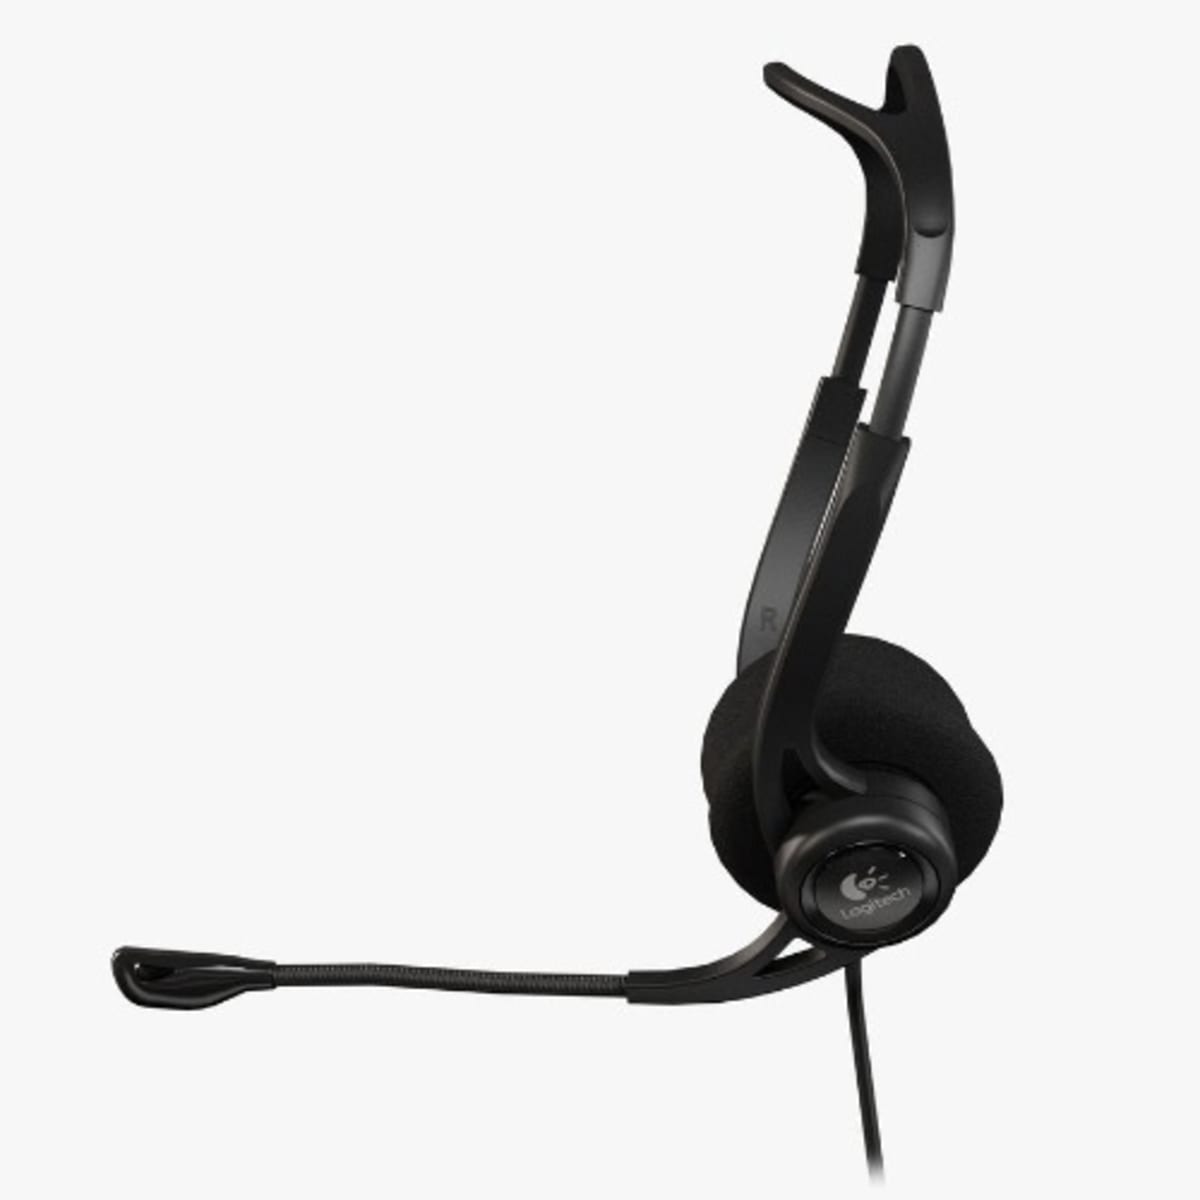 Logitech Headset Shopping Online USB | Konga 960 Pc